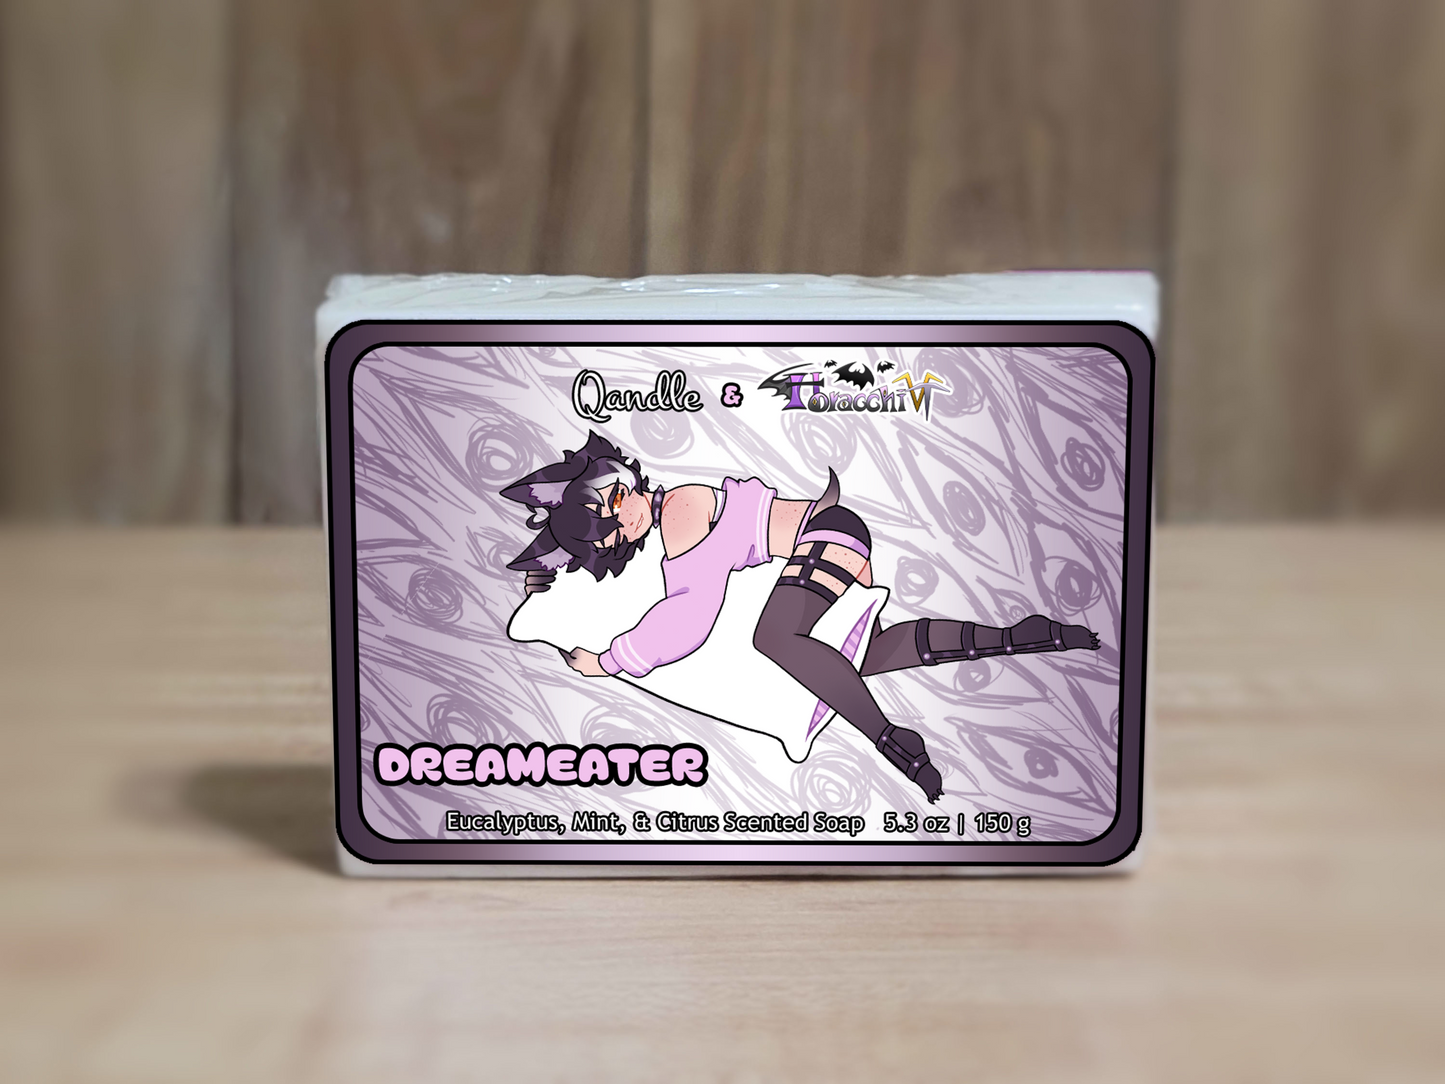 Dreameater Soap Bar